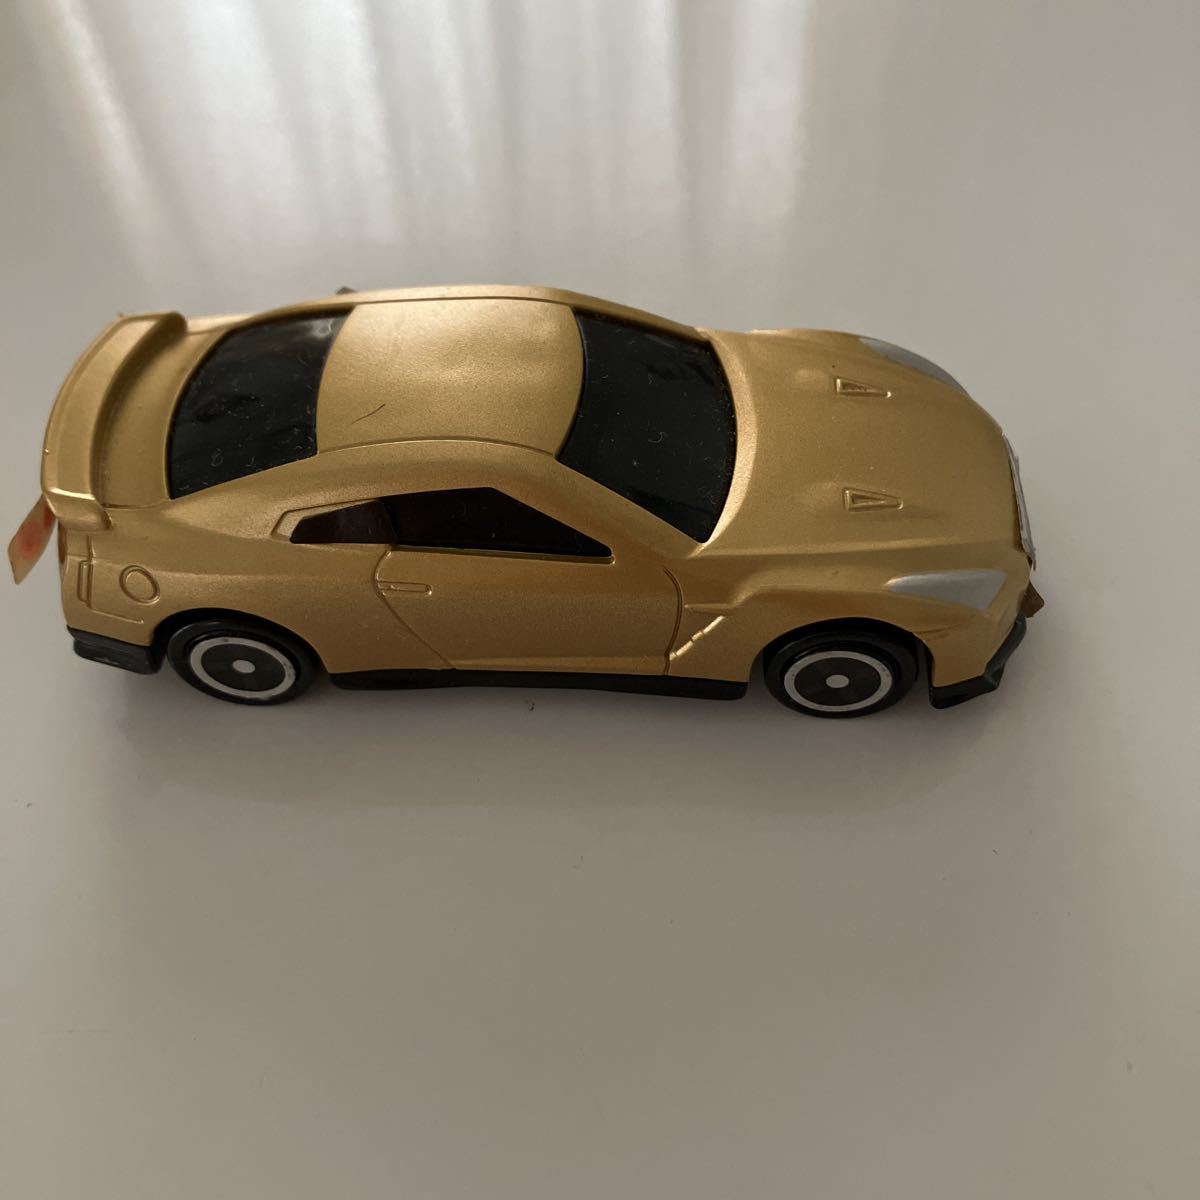  Tomica happy комплект Nissan GT-R специальный specification Gold 